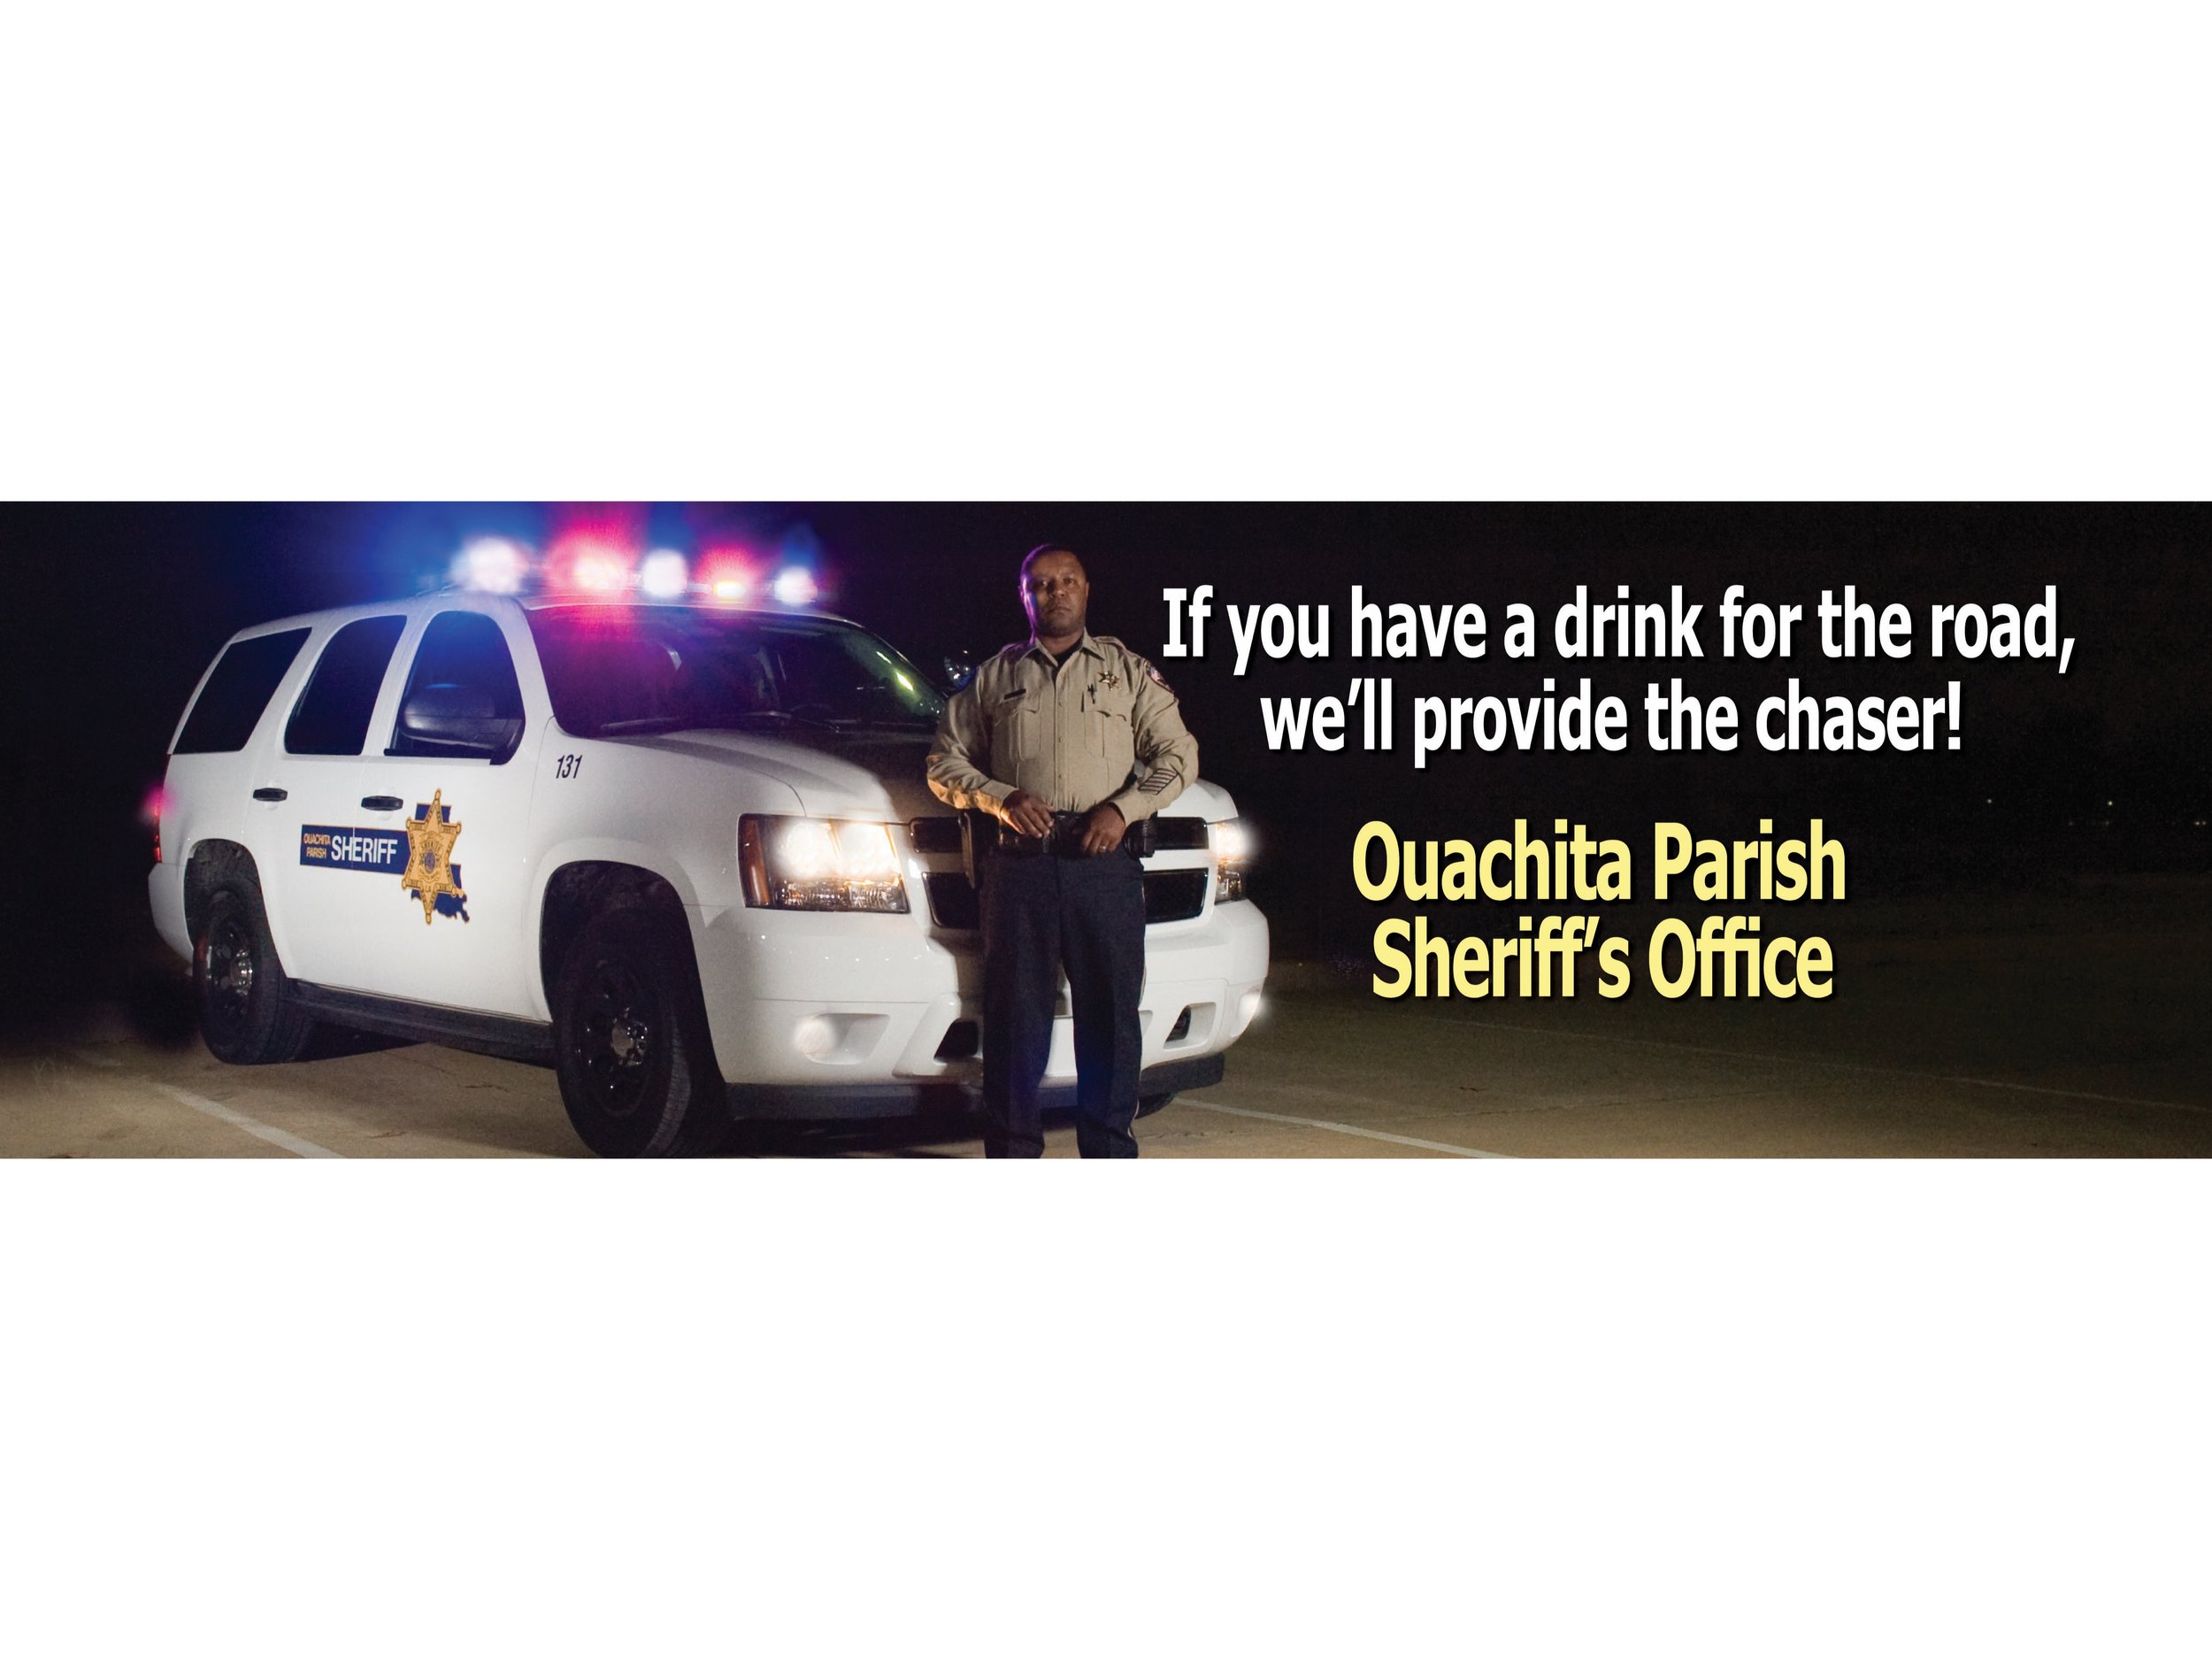 Ouachita Parish Sheriff's Office